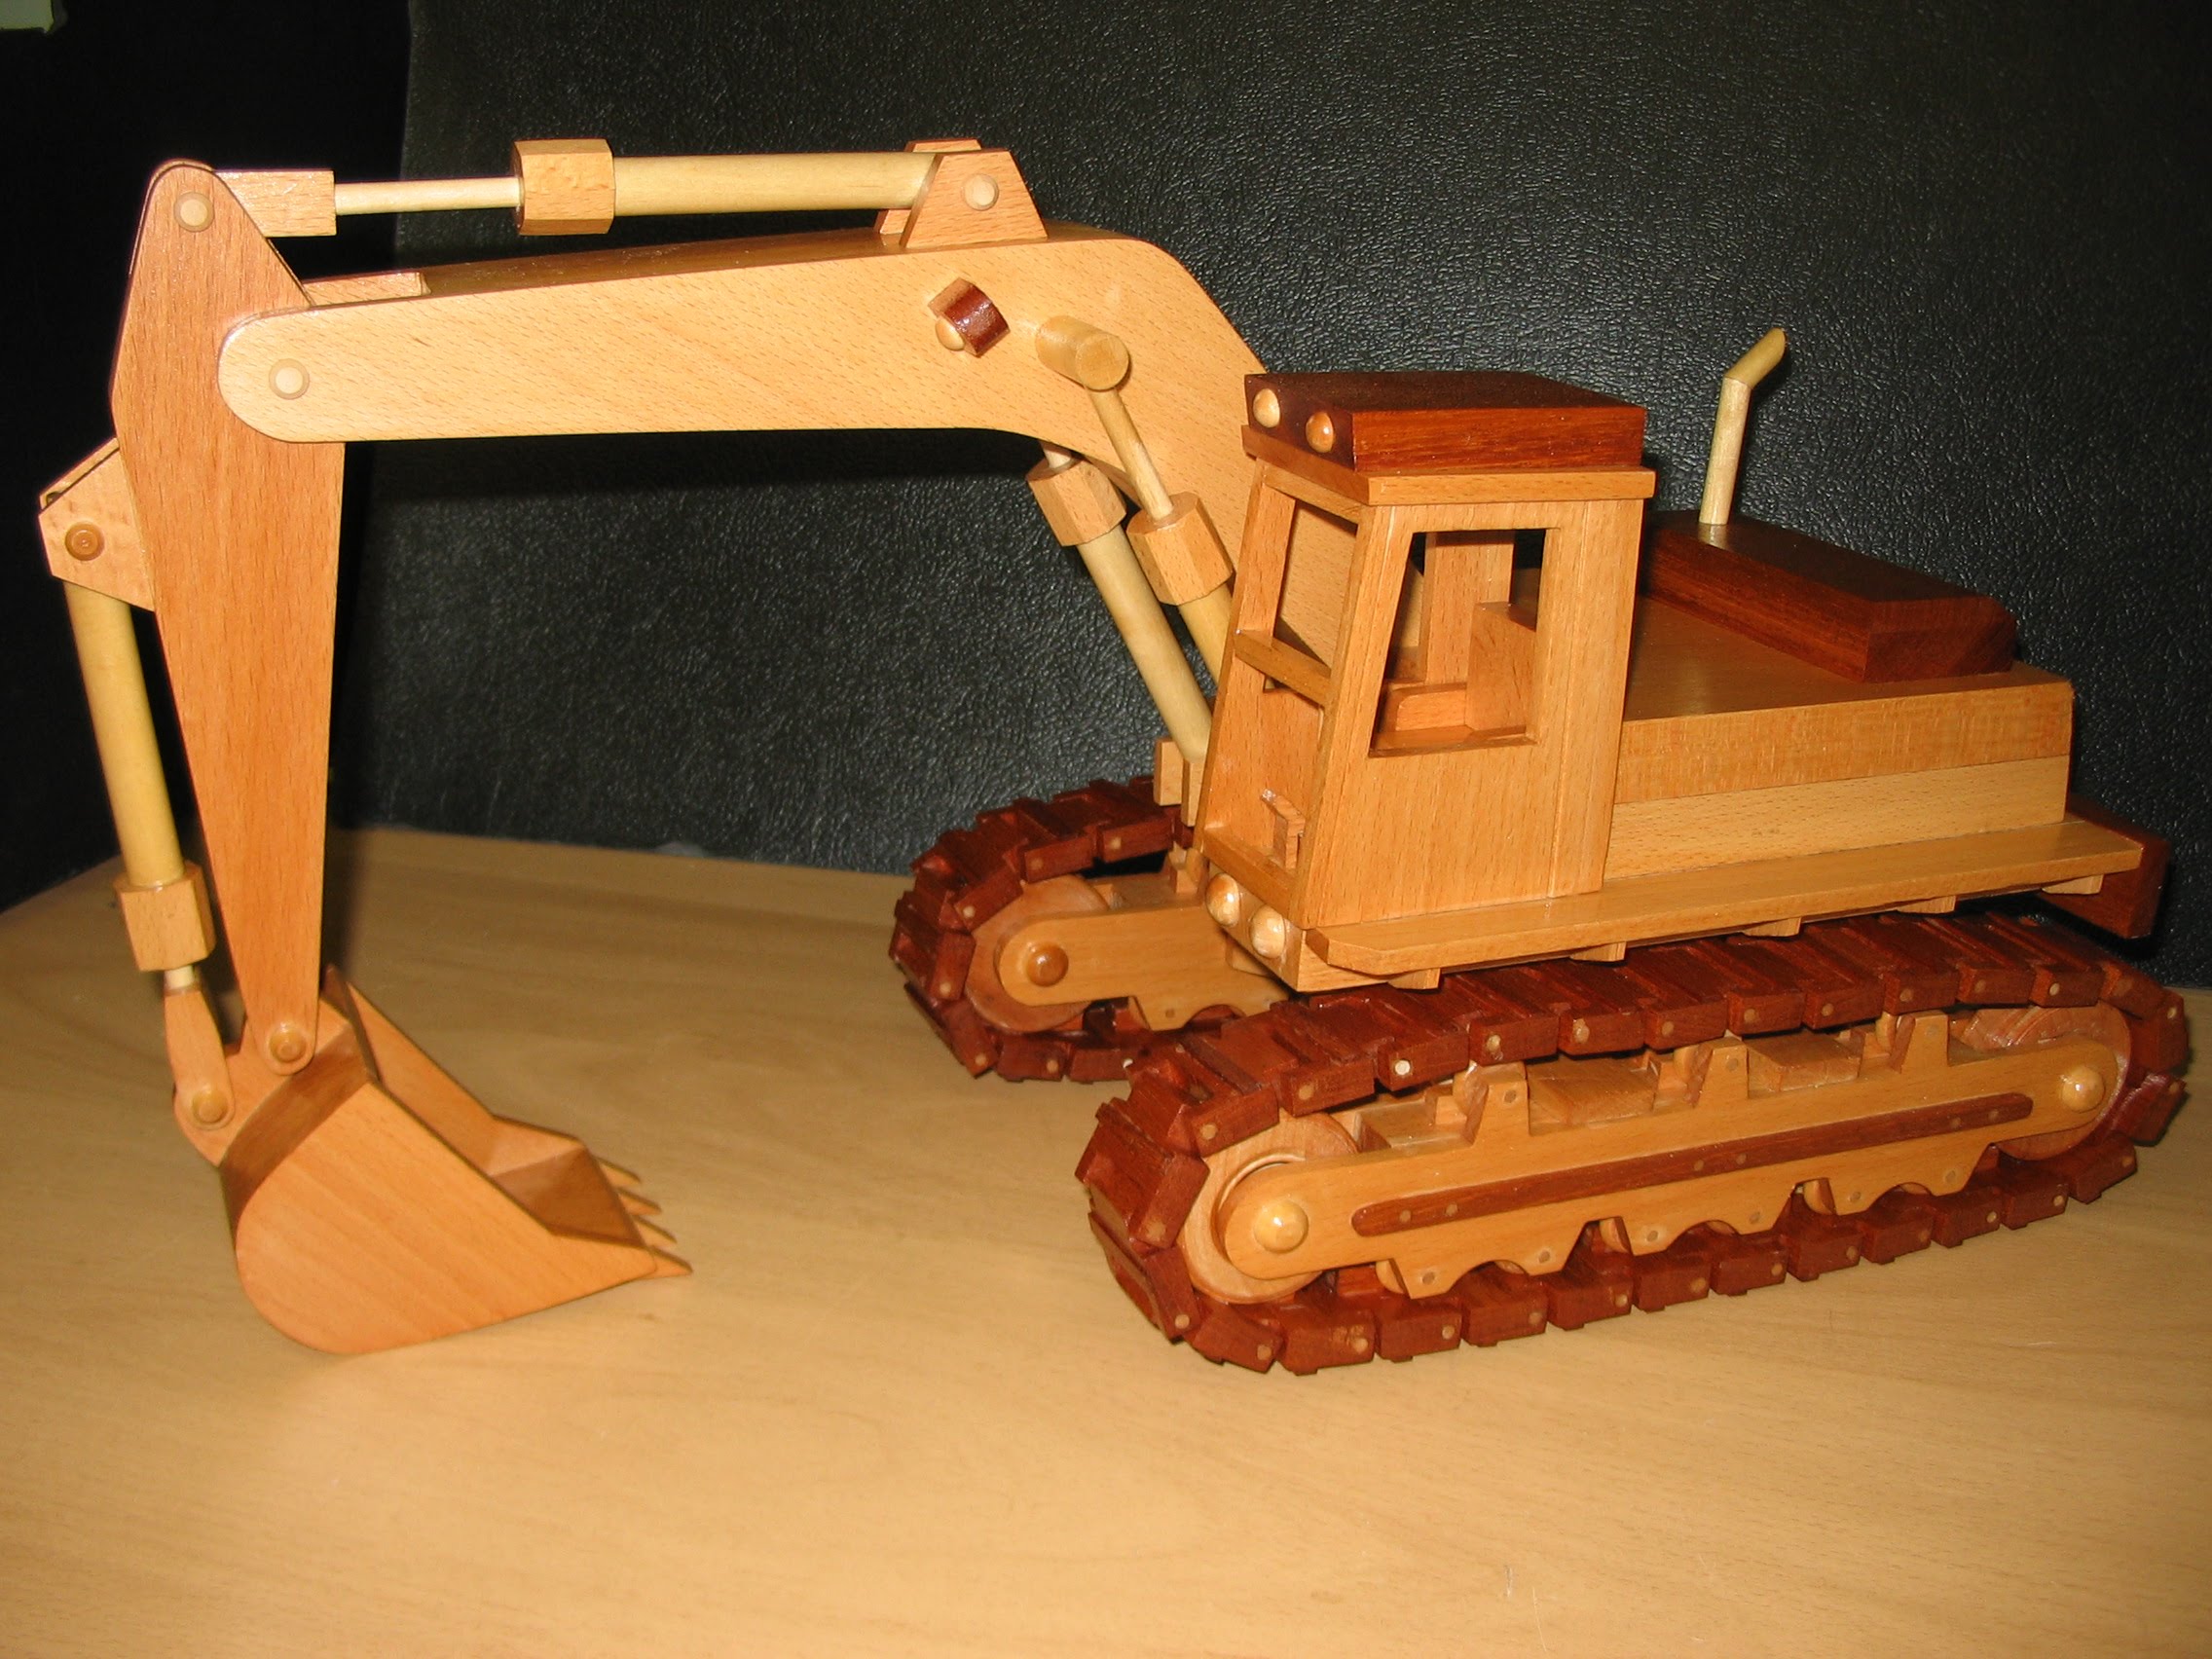 Wooden Model of an Excavator - YouTube